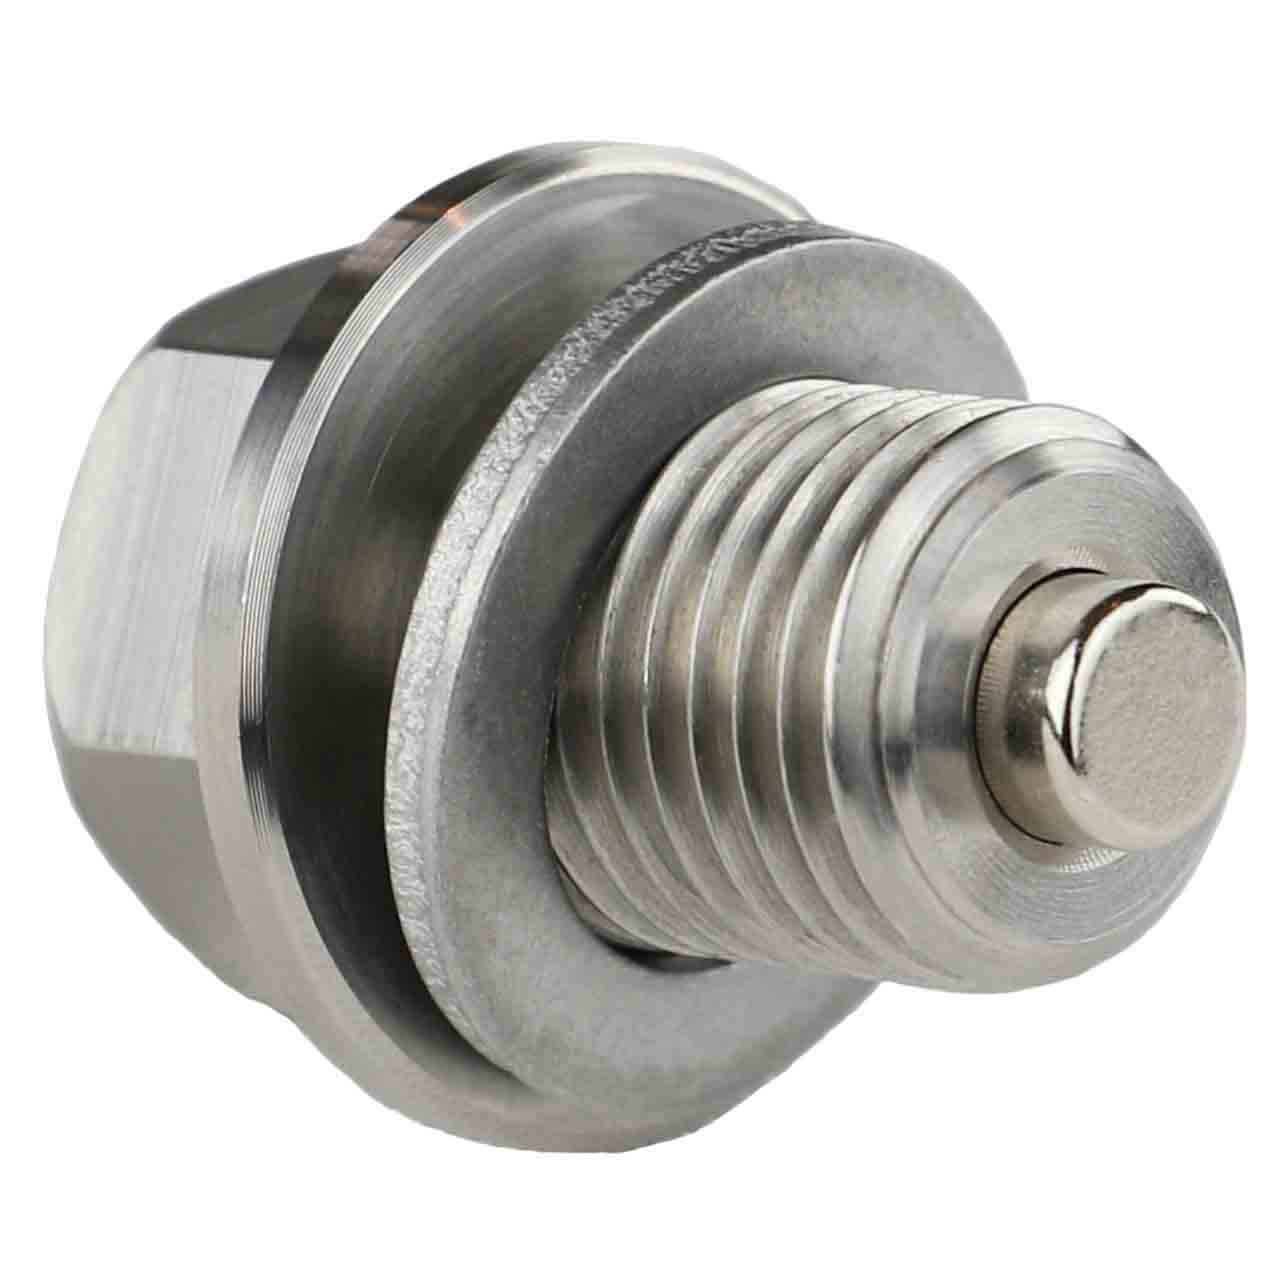 Suzuki Sidekick Magnetic Oil Drain Plug - 1996-1998 - 1.8 Liter - 4 Cylinder - Made In USA - Stainless Steel - Part Number 09247-14044